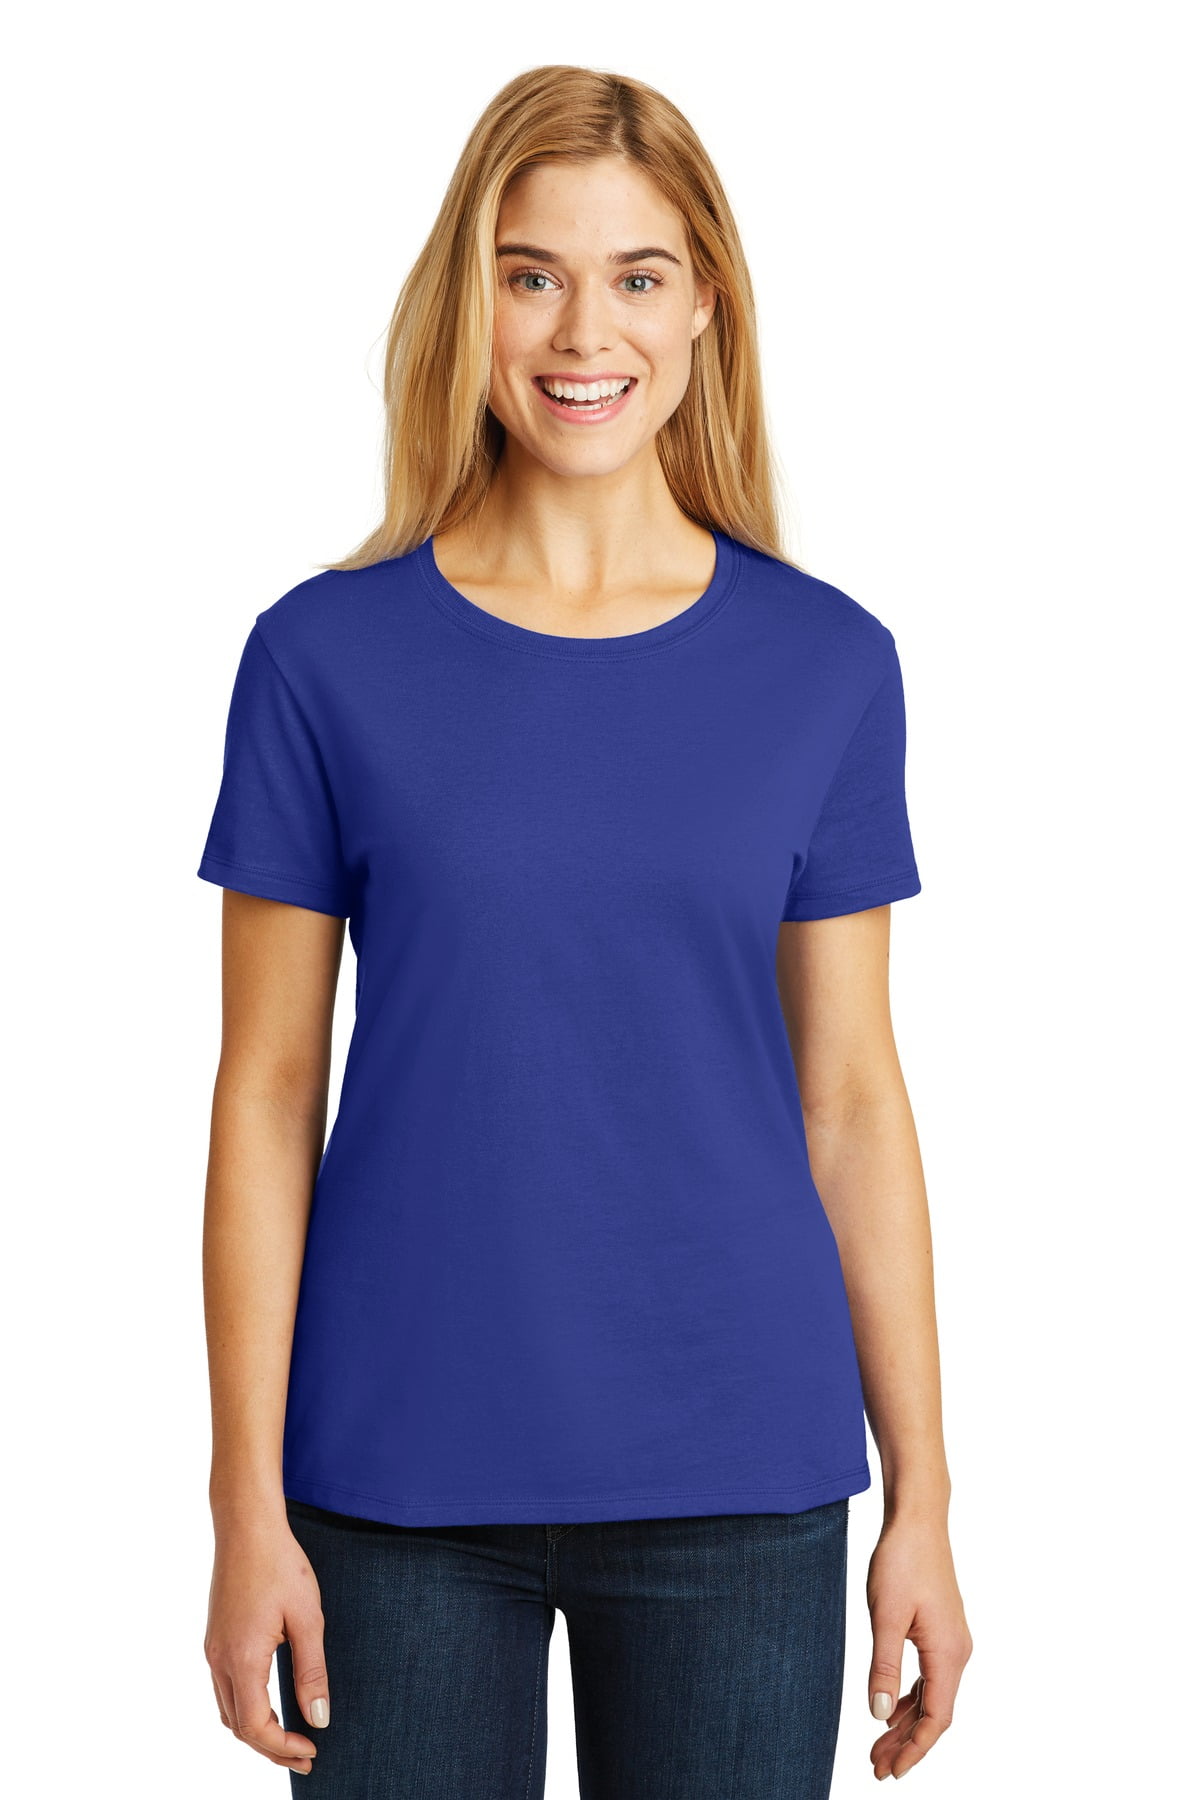 Hanes Women's 100 Percent Cotton Short Sleeve T-Shirt - SL04 - Walmart.com